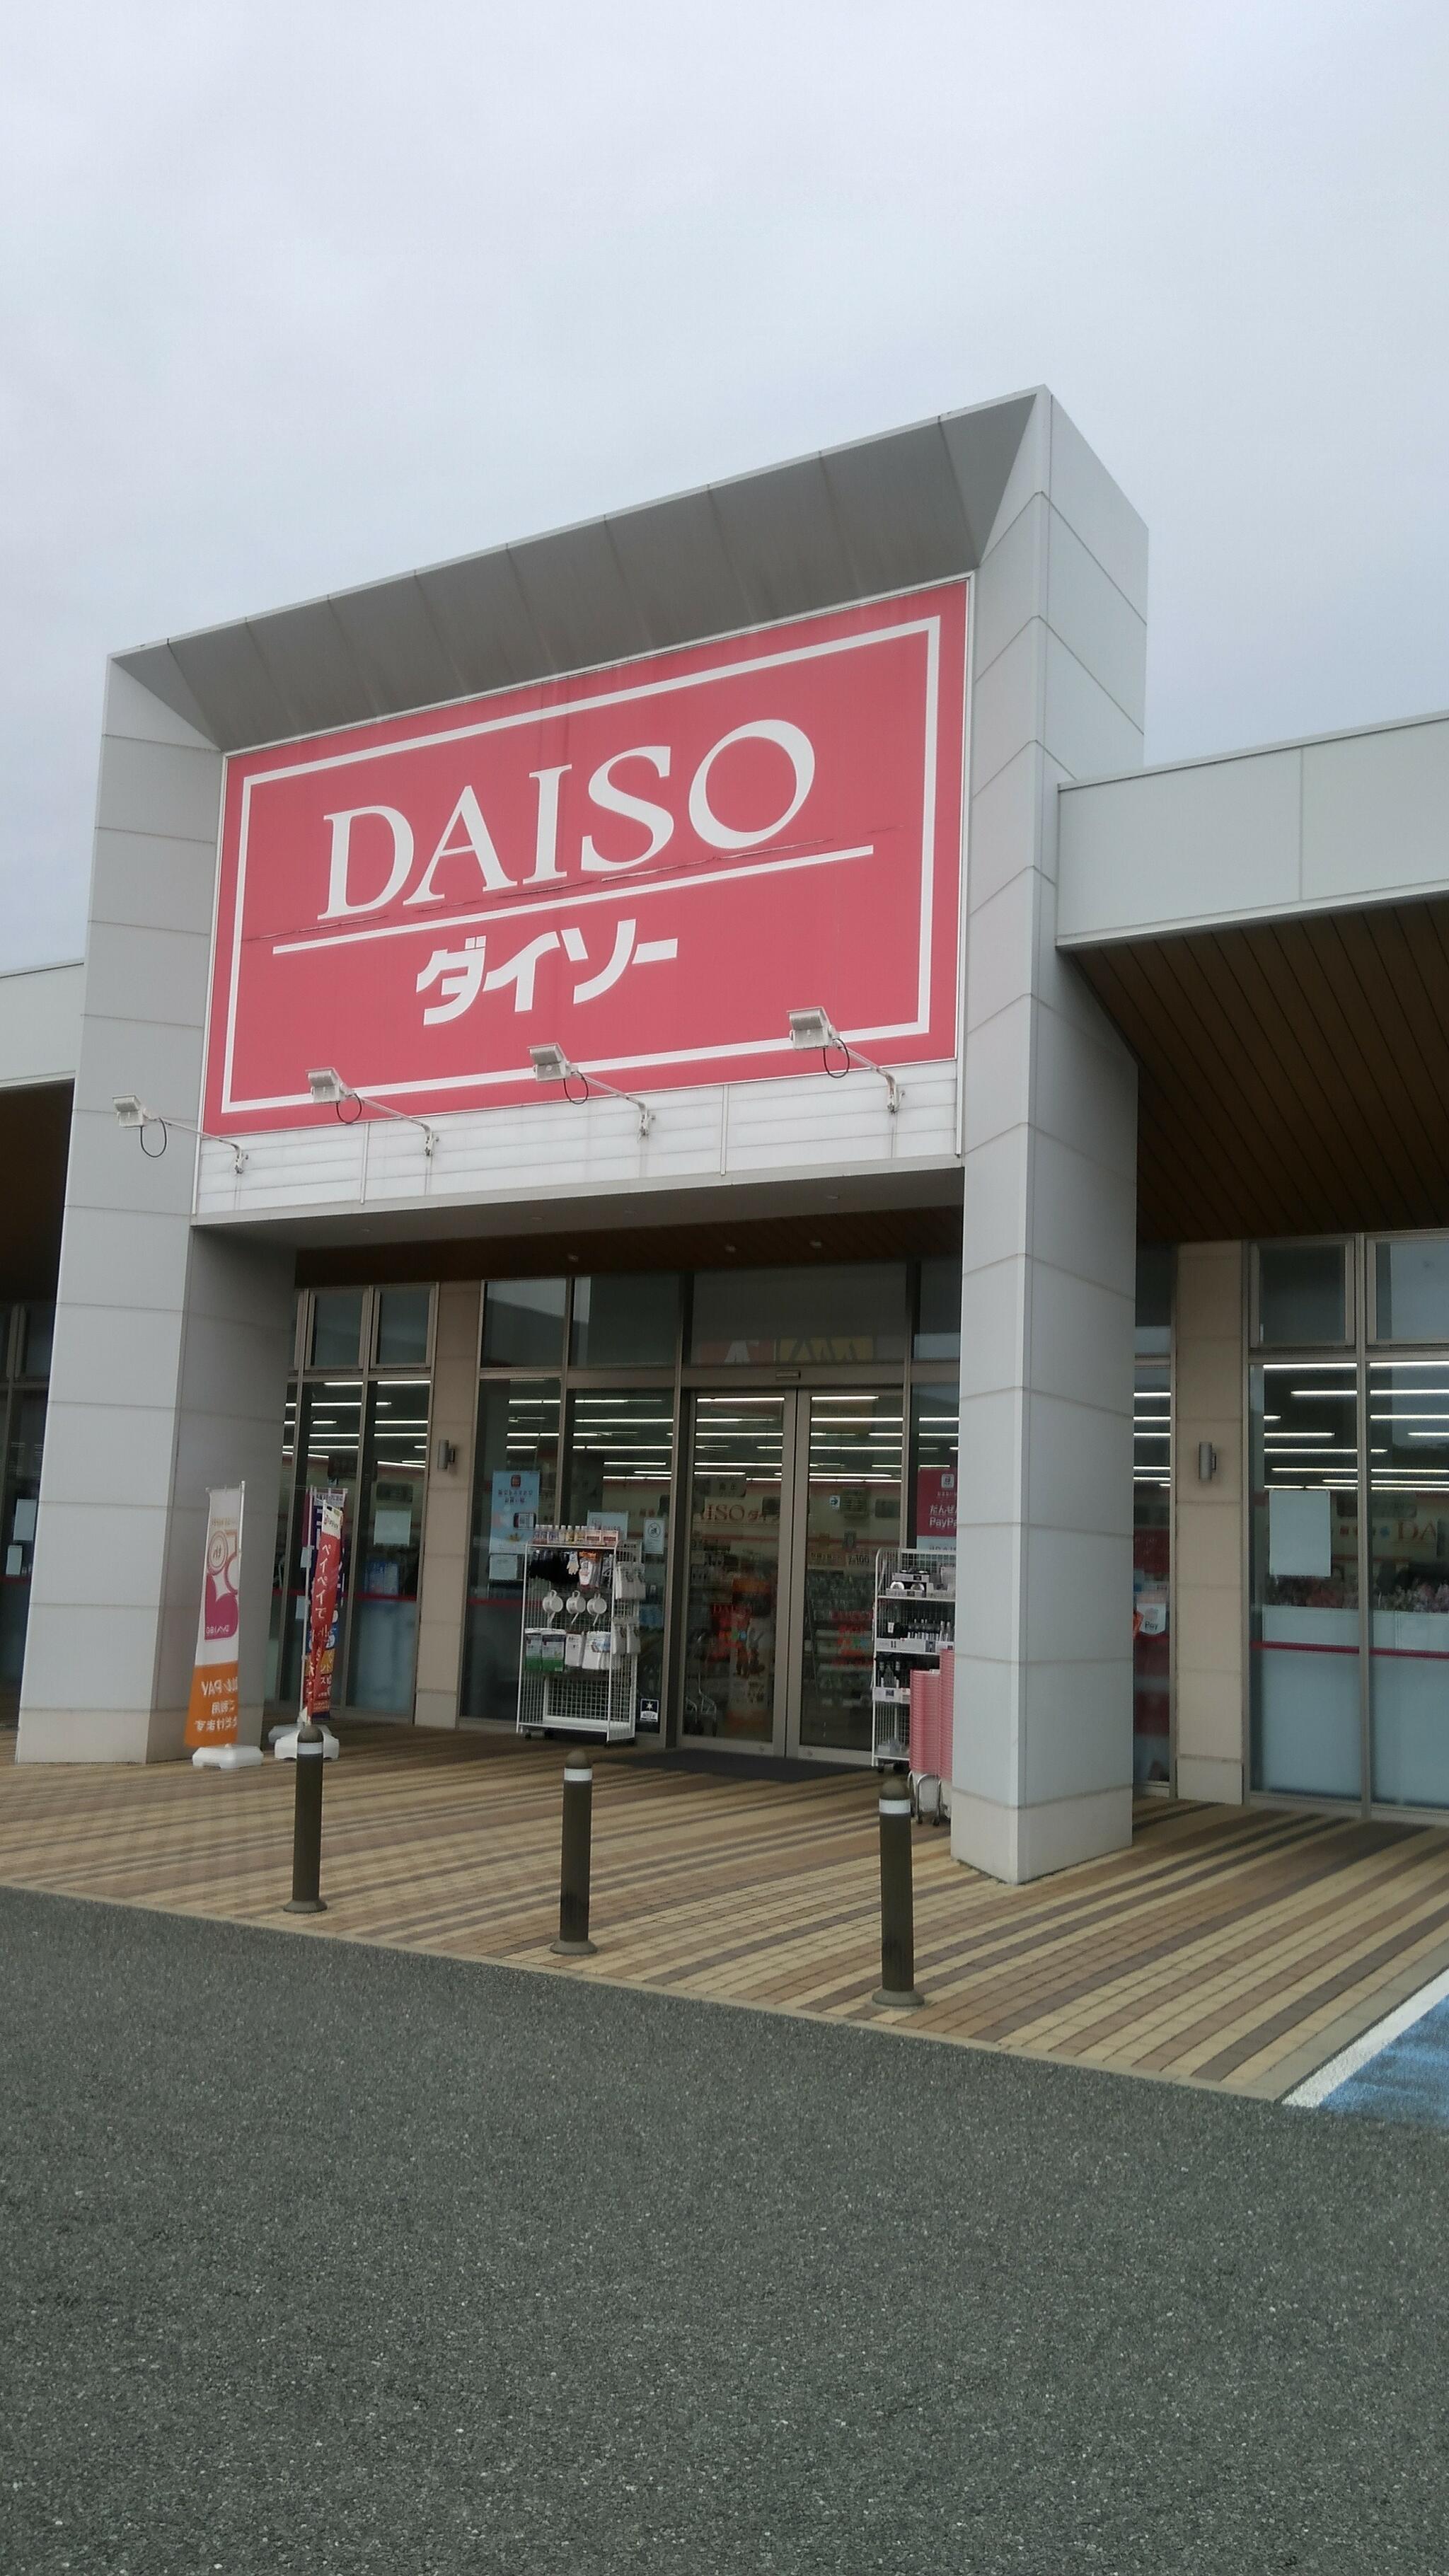 DAISO レガネットガーデン福津店の代表写真1